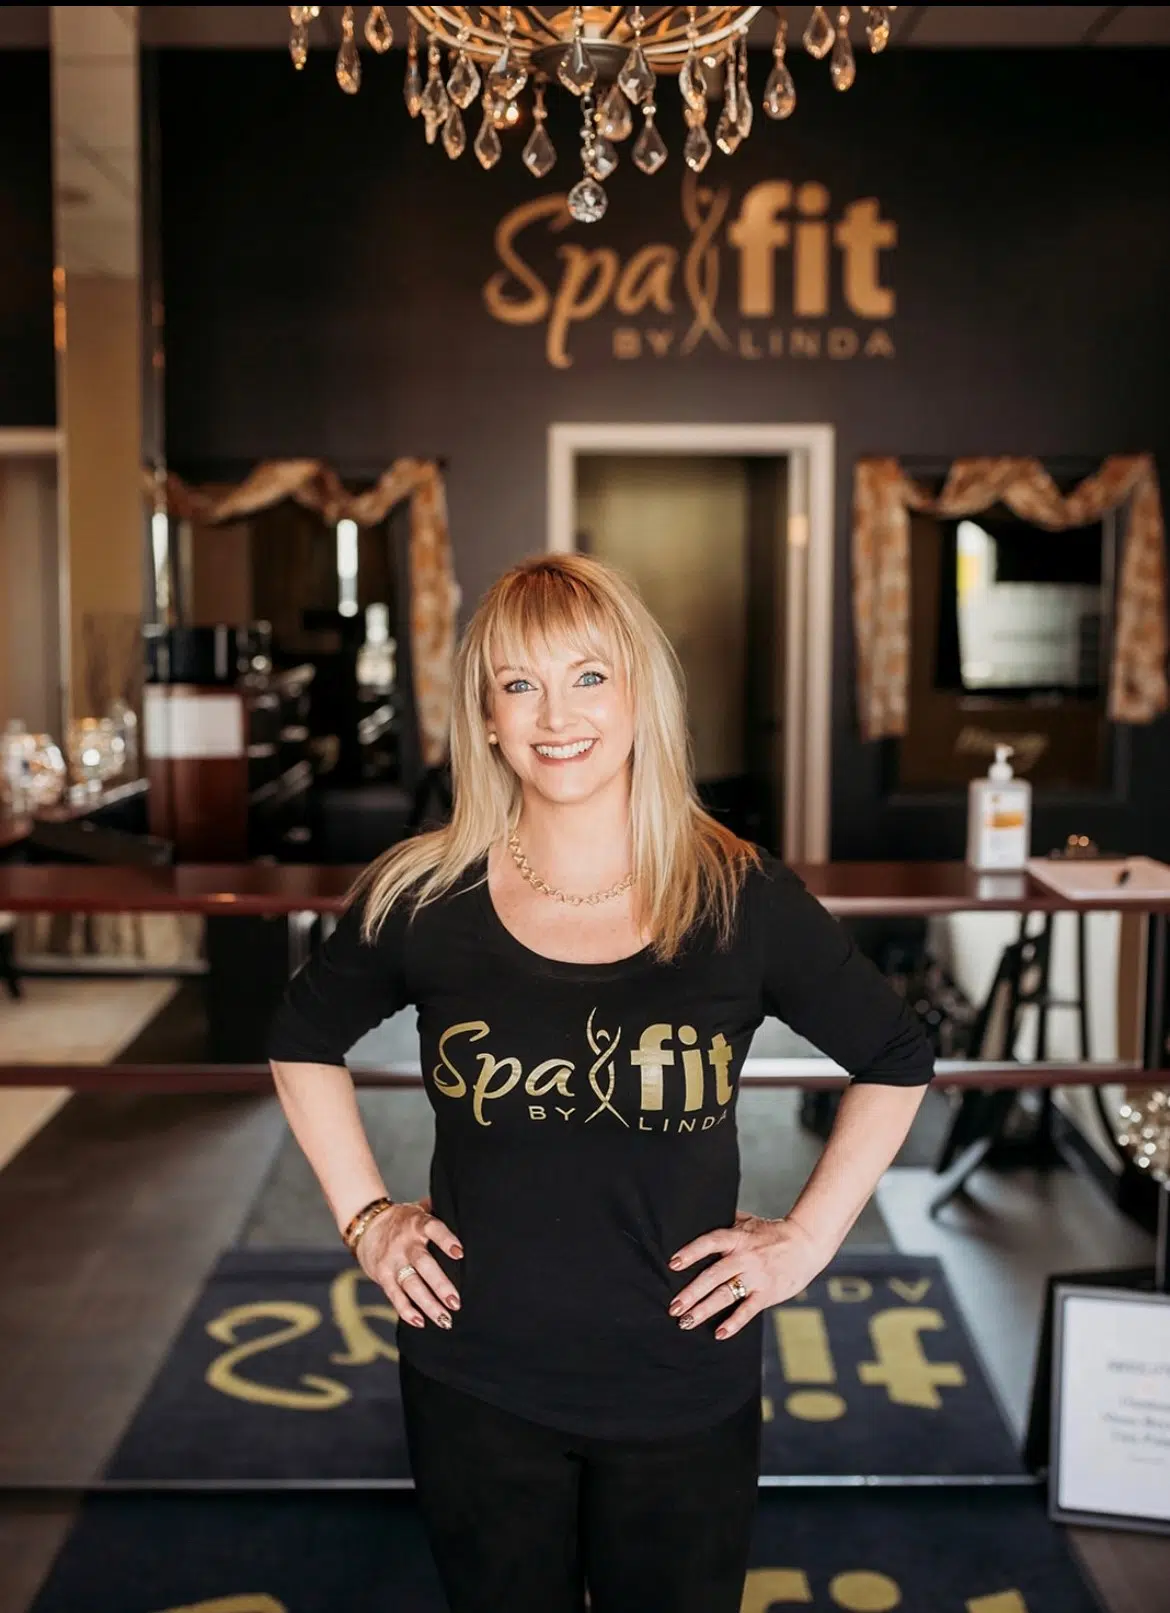 Best Spa: SpaFit by Linda